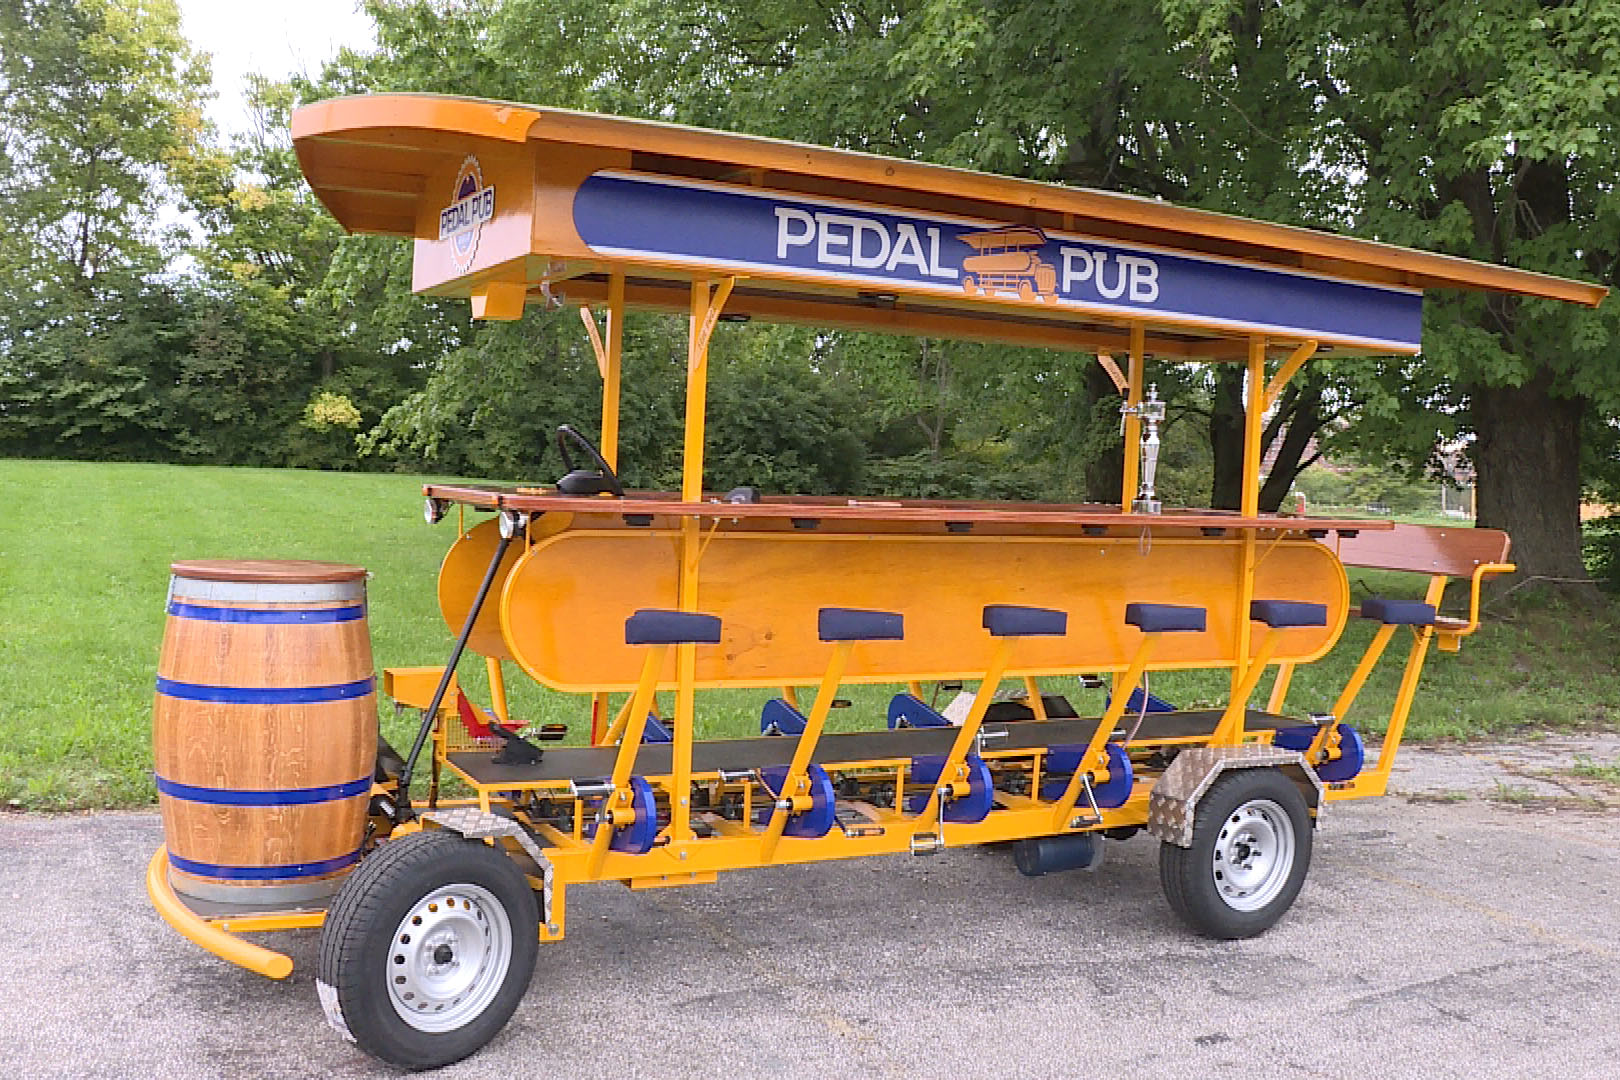 the pedal pub